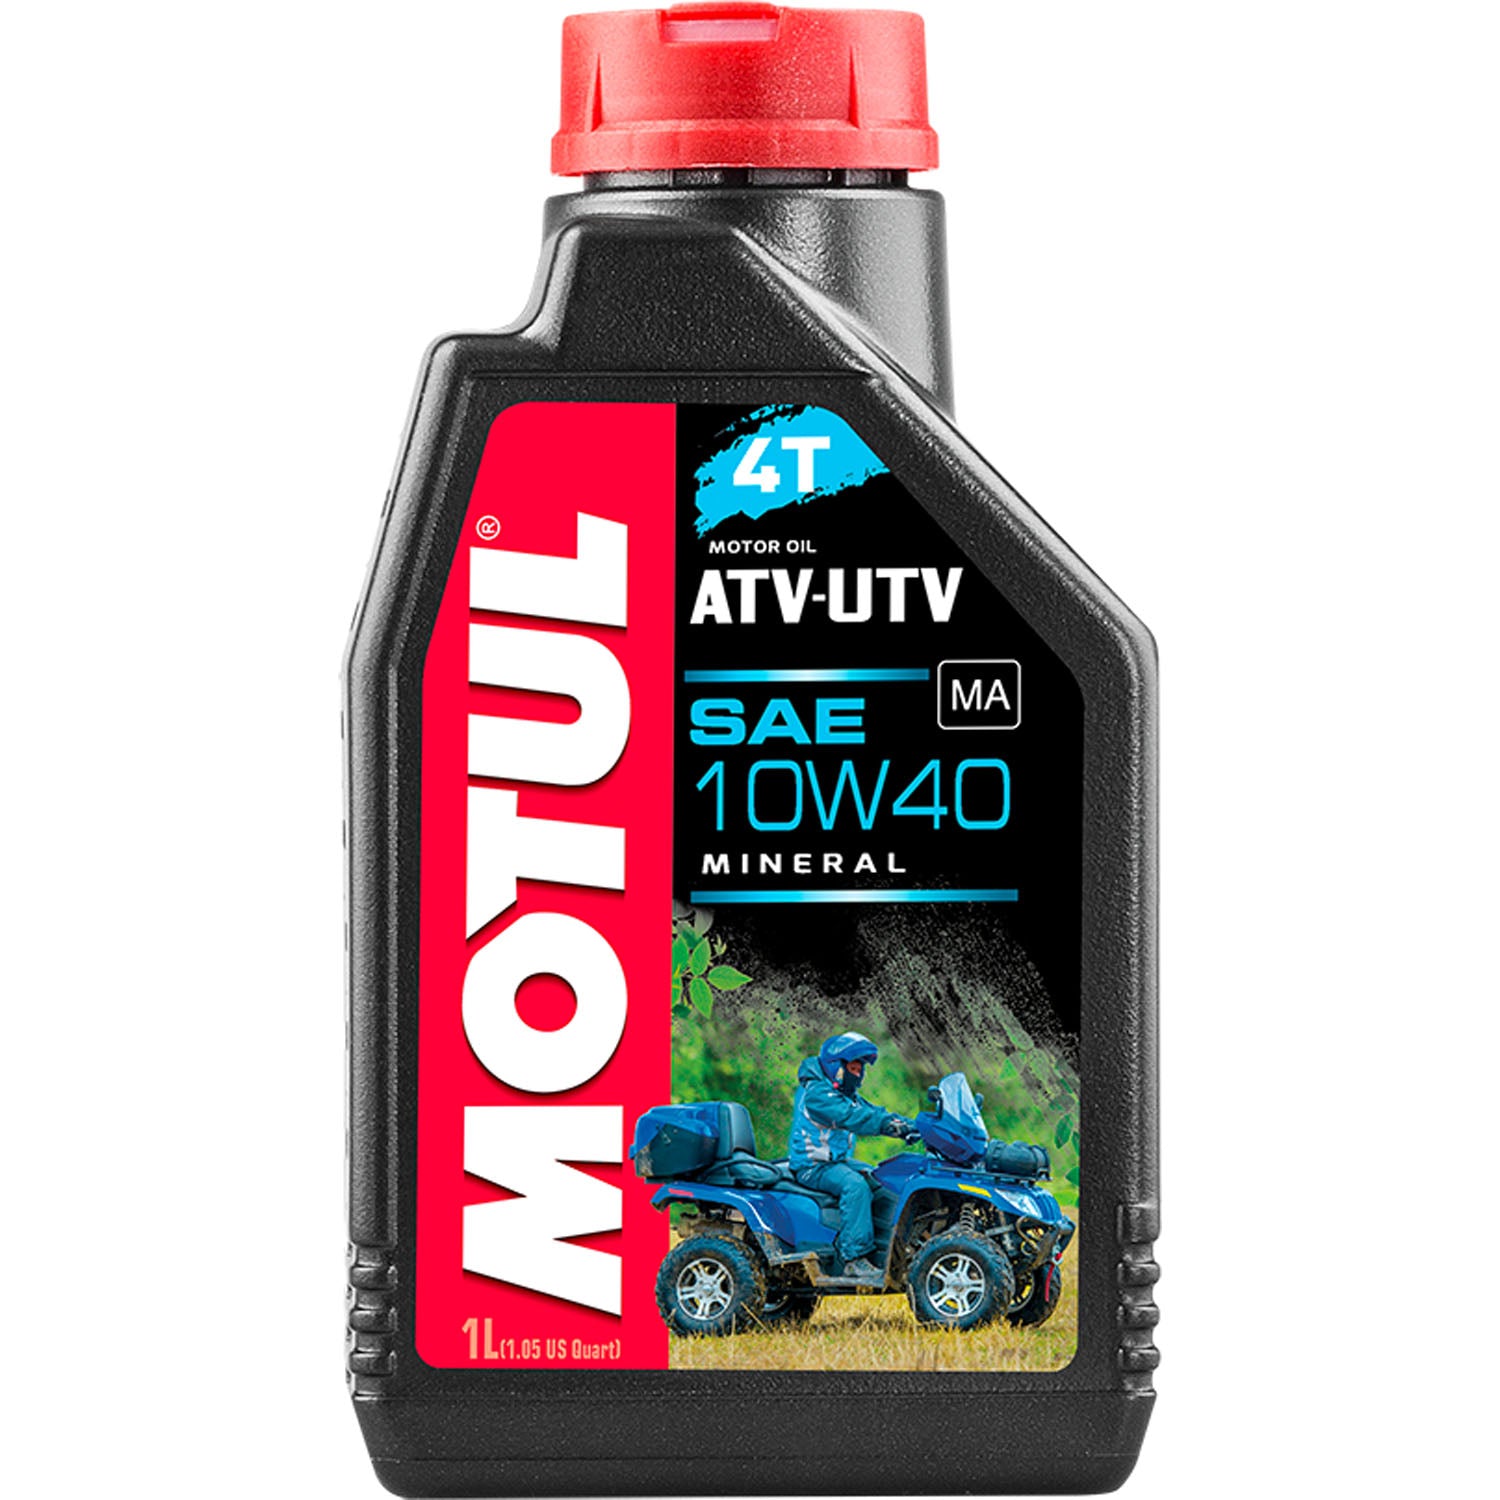 Motul ATV-UTV 4T Mineral Motor Oil 10W40 - 1 Liter